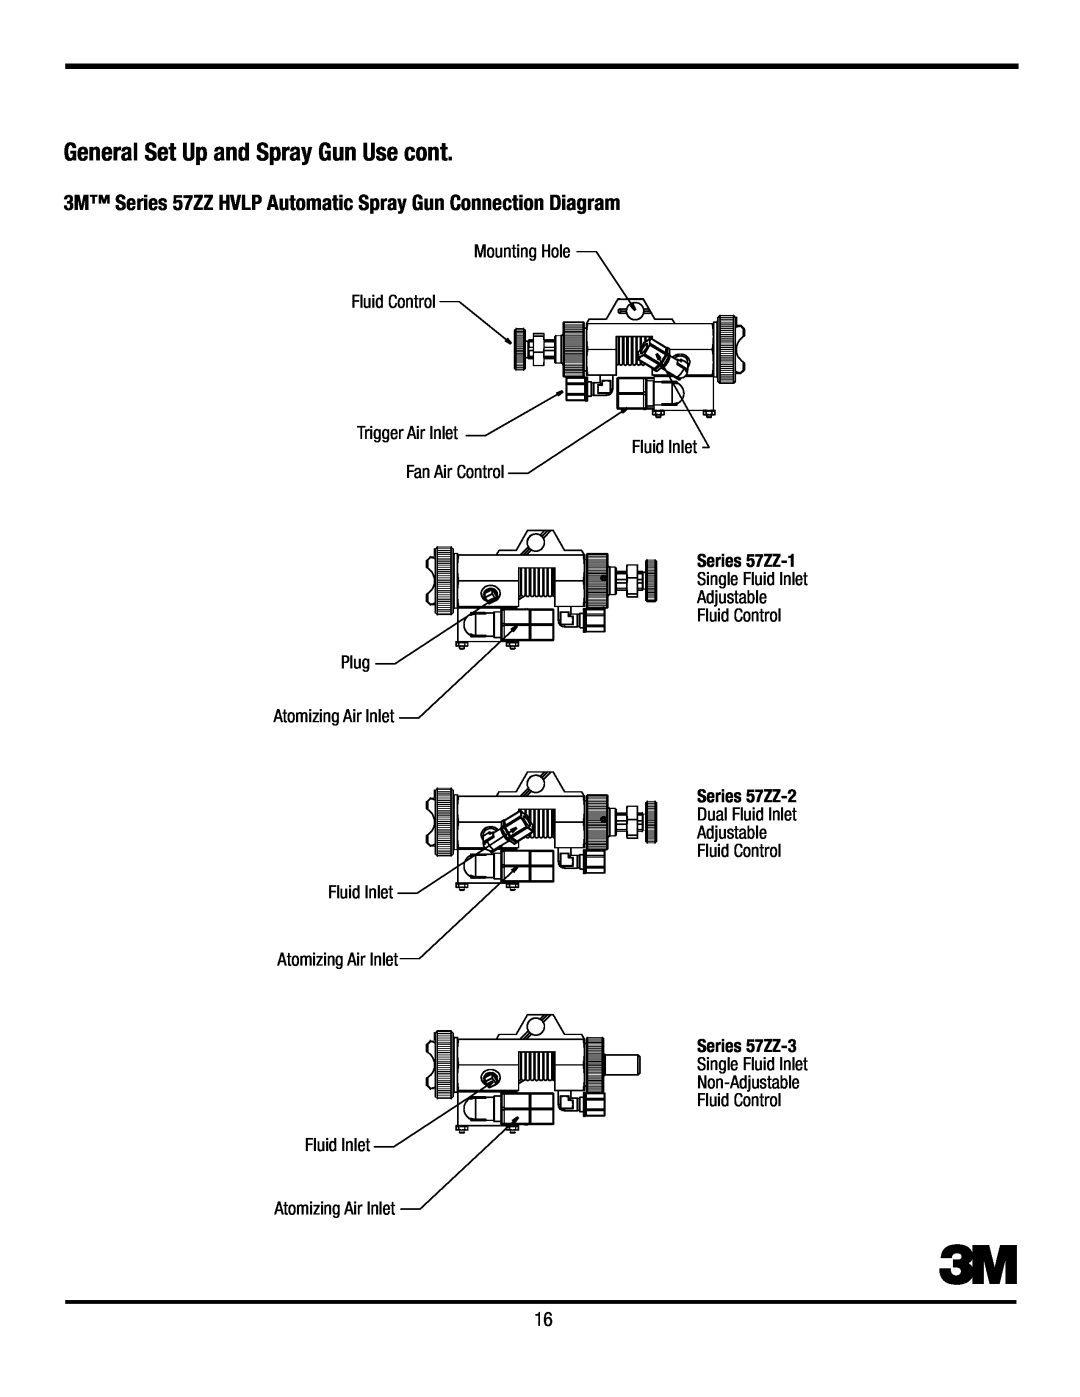 3M General Set Up and Spray Gun Use cont, 3M Series 57ZZ HVLP Automatic Spray Gun Connection Diagram, Series 57ZZ-1 